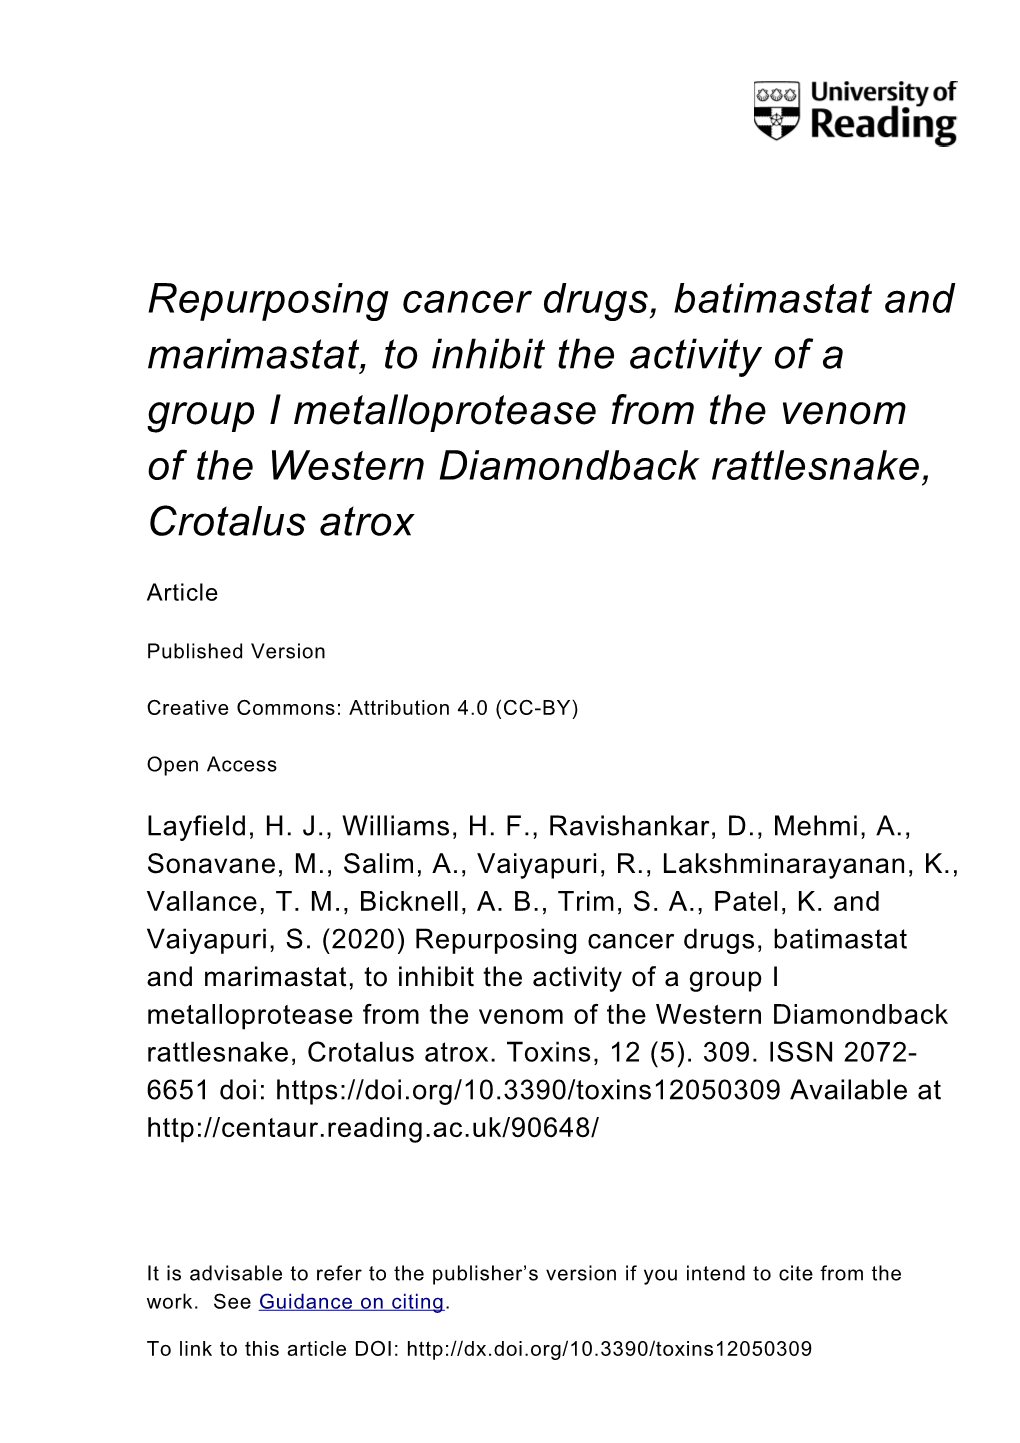 Repurposing Cancer Drugs Batimastat and Marimastat to Inhibit